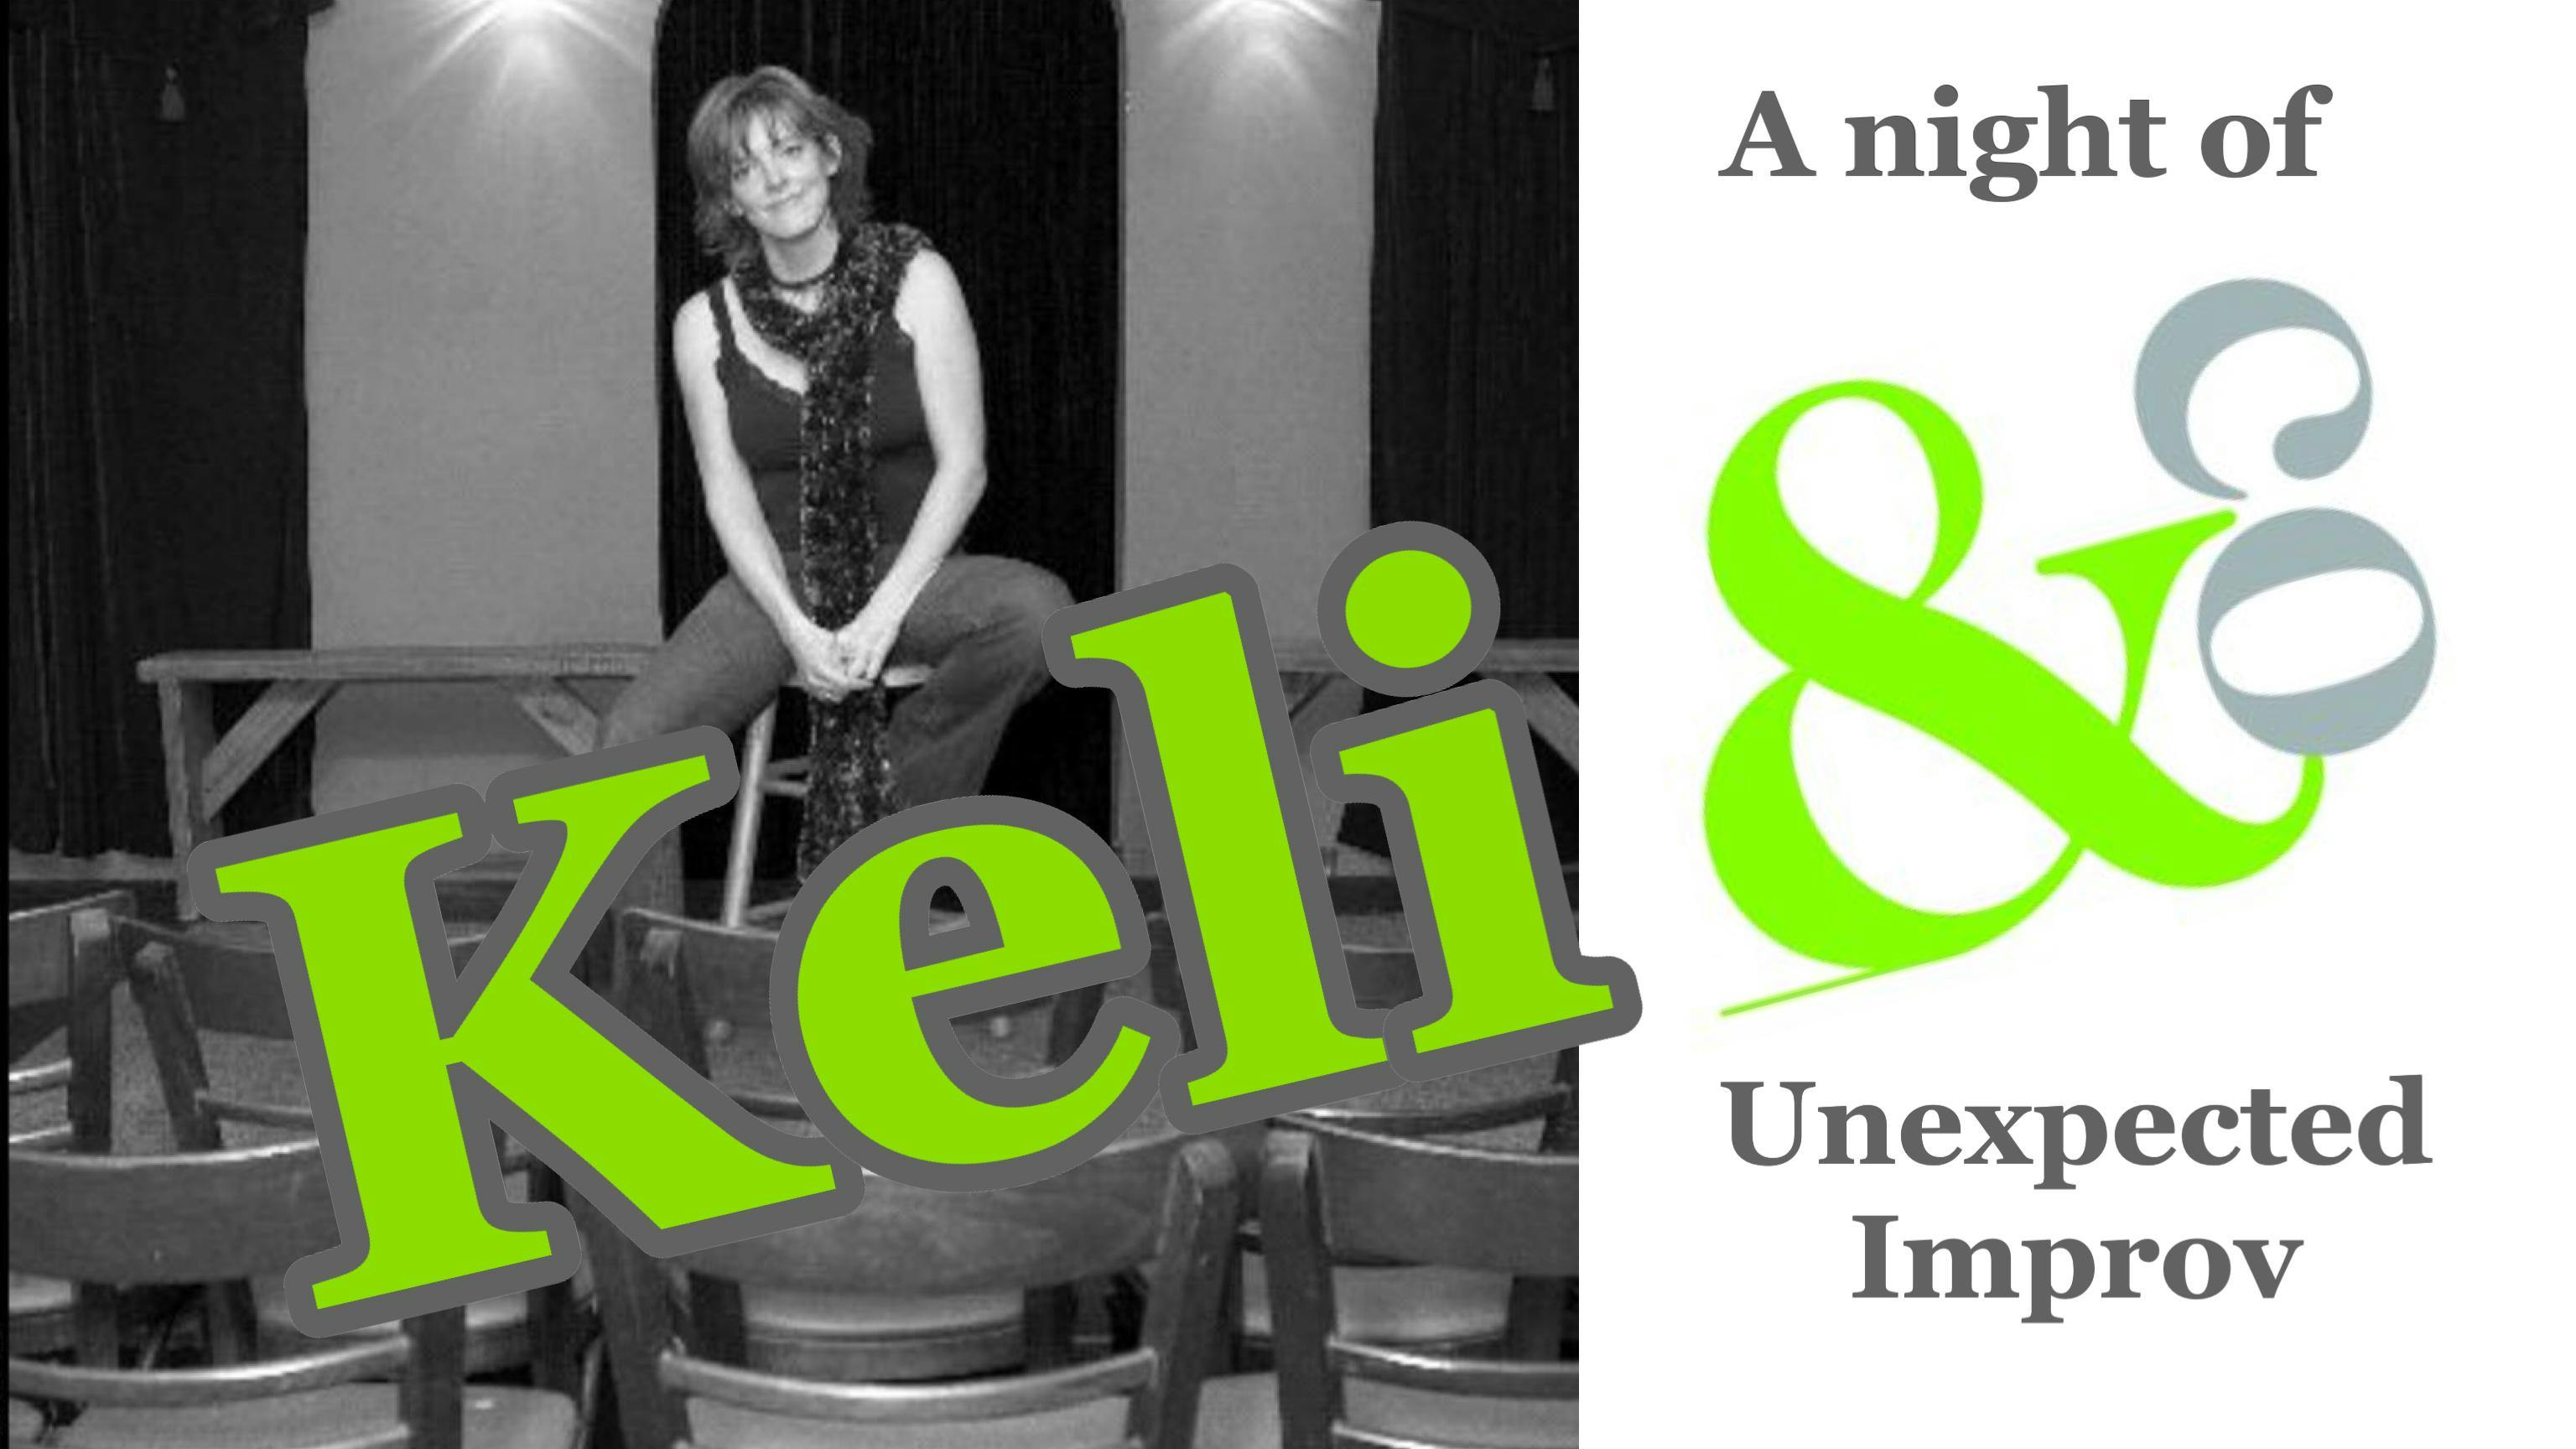 Keli & Co: a night of unexpected improv!